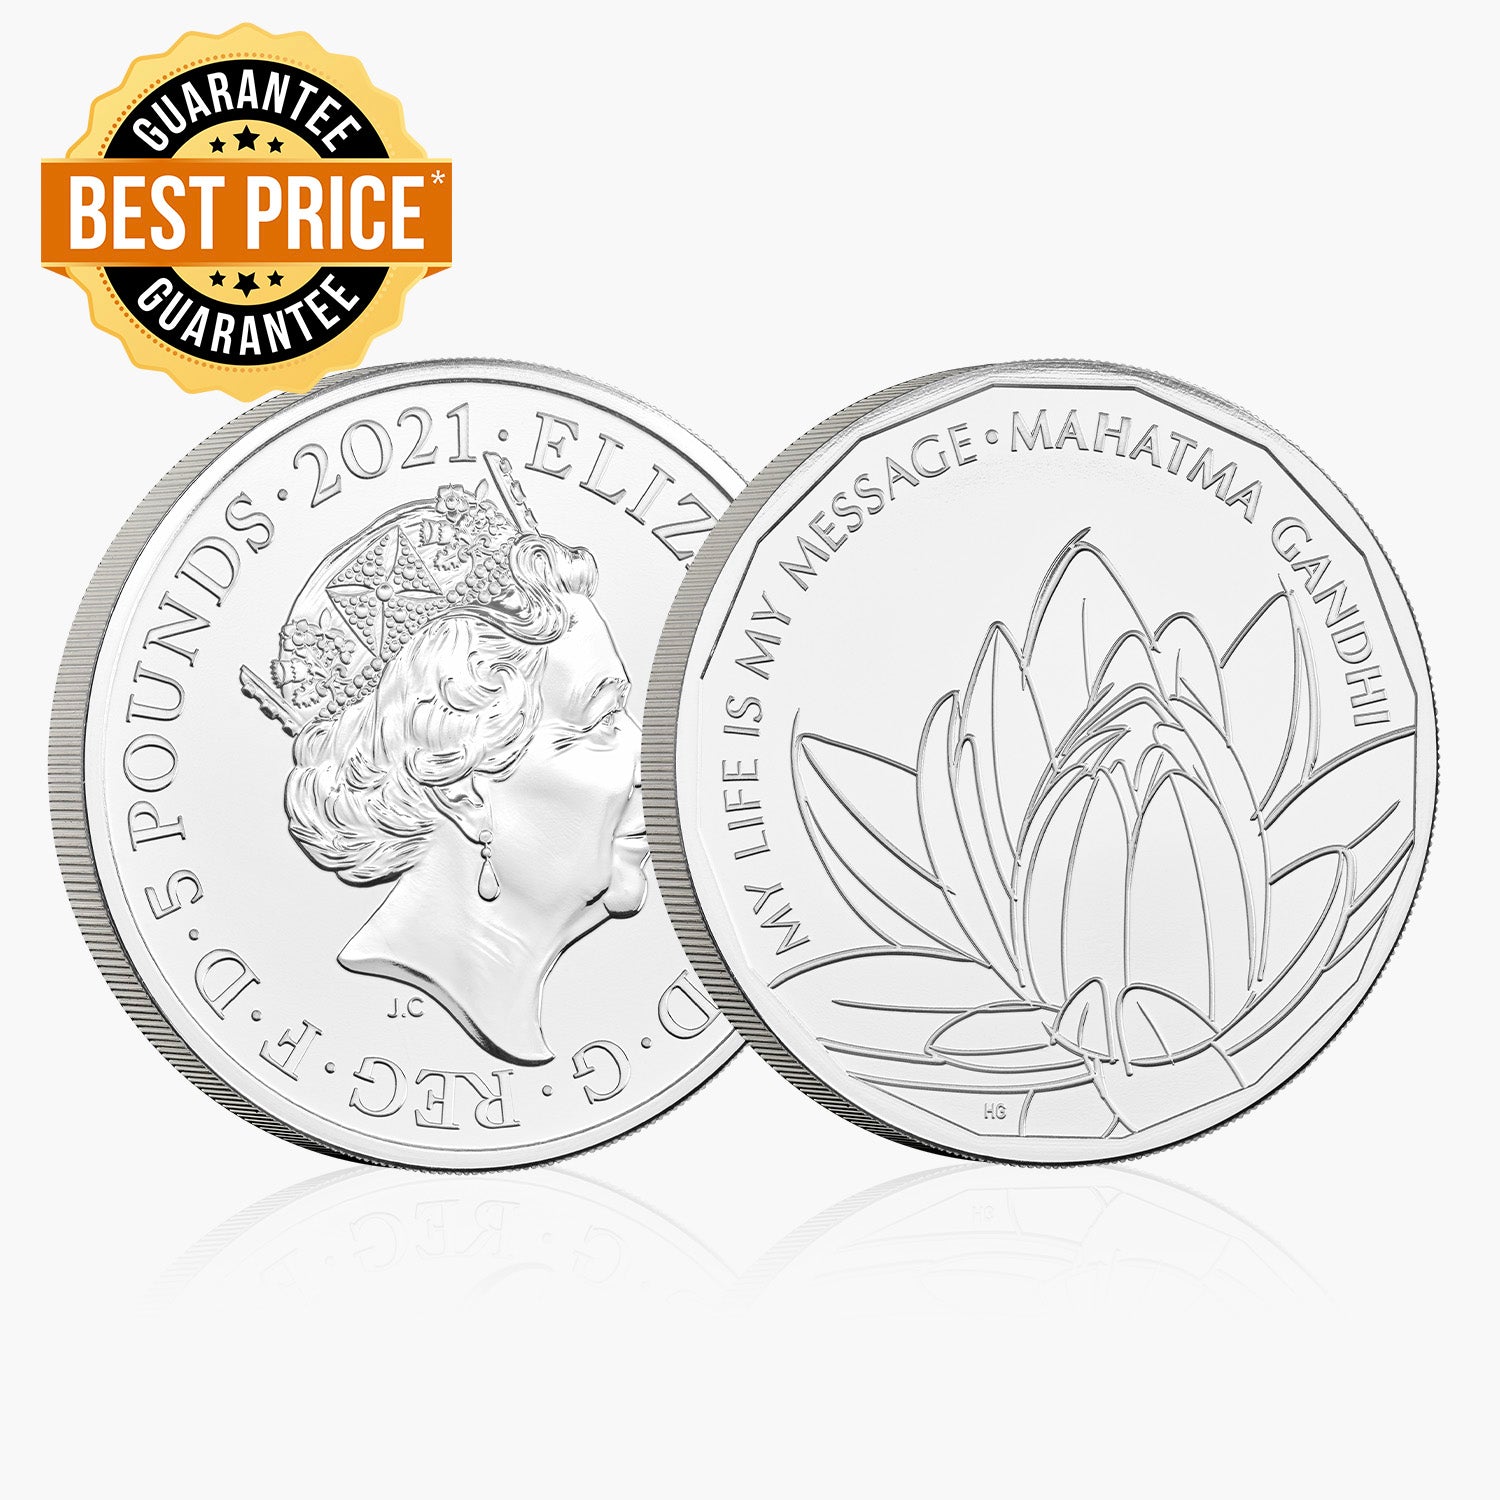 Gandhi £5 Brilliant Uncirculated Coin